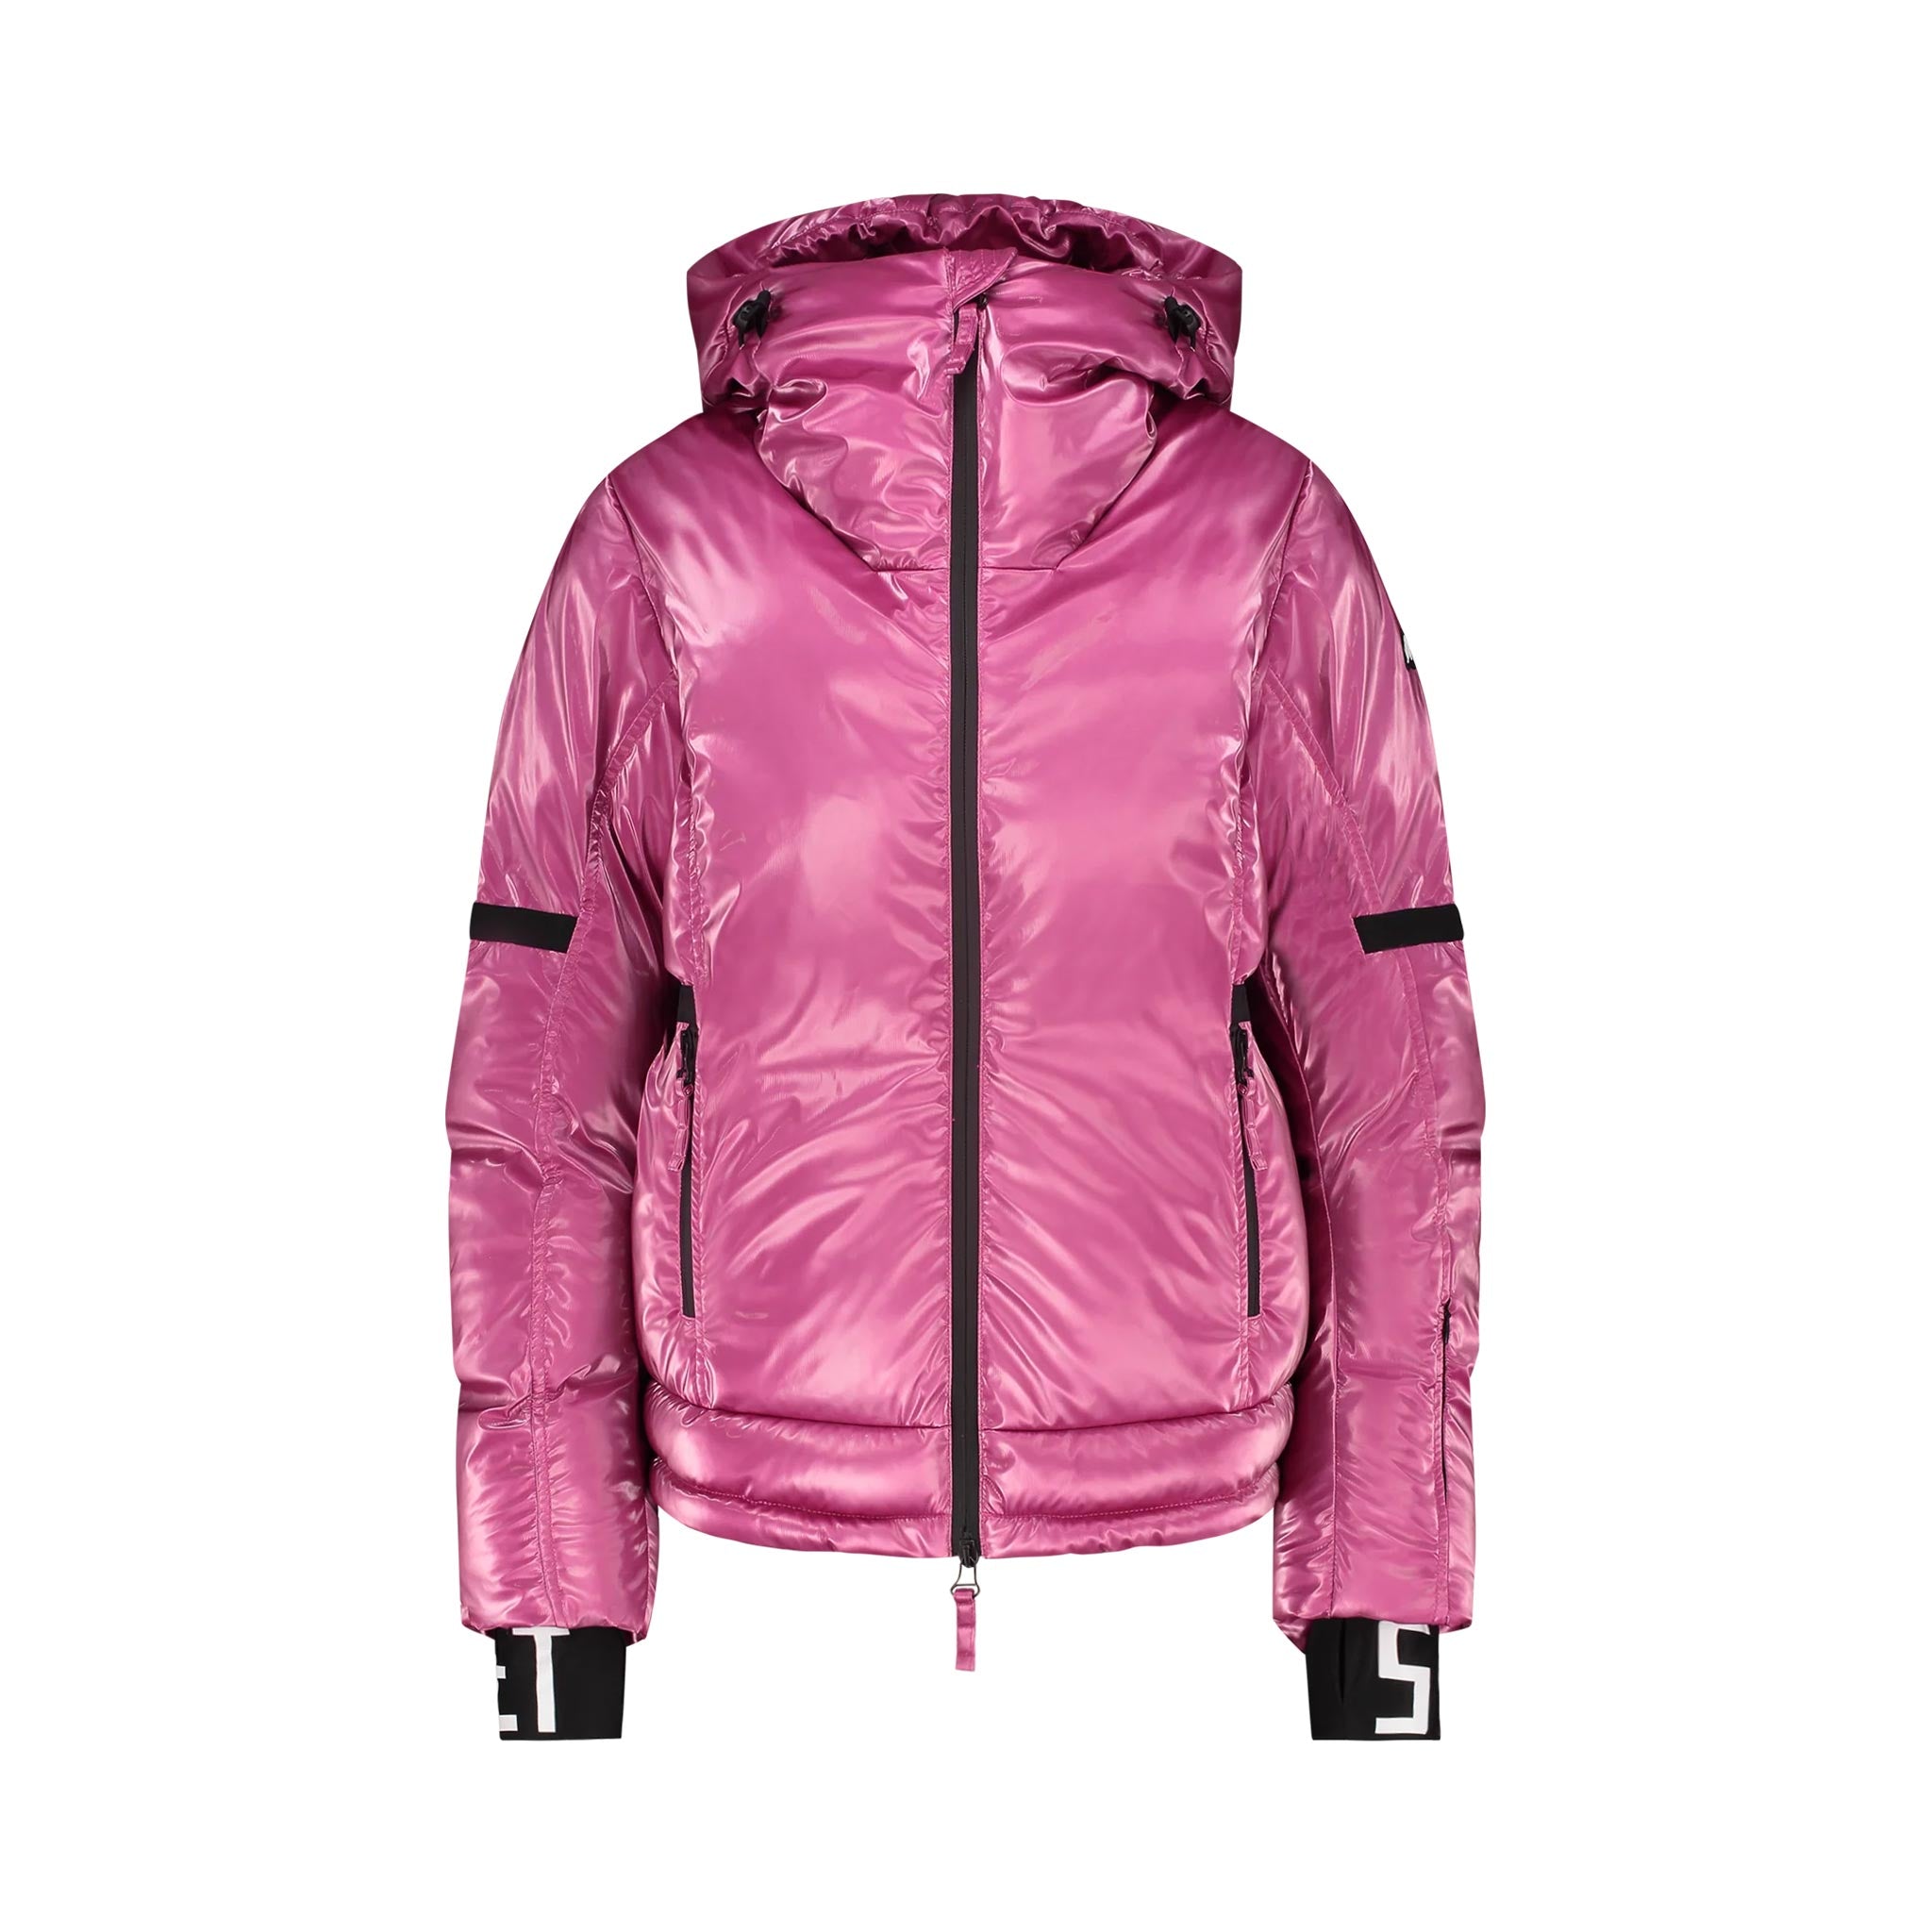 Joanna Ski Jacket in Hot Pink